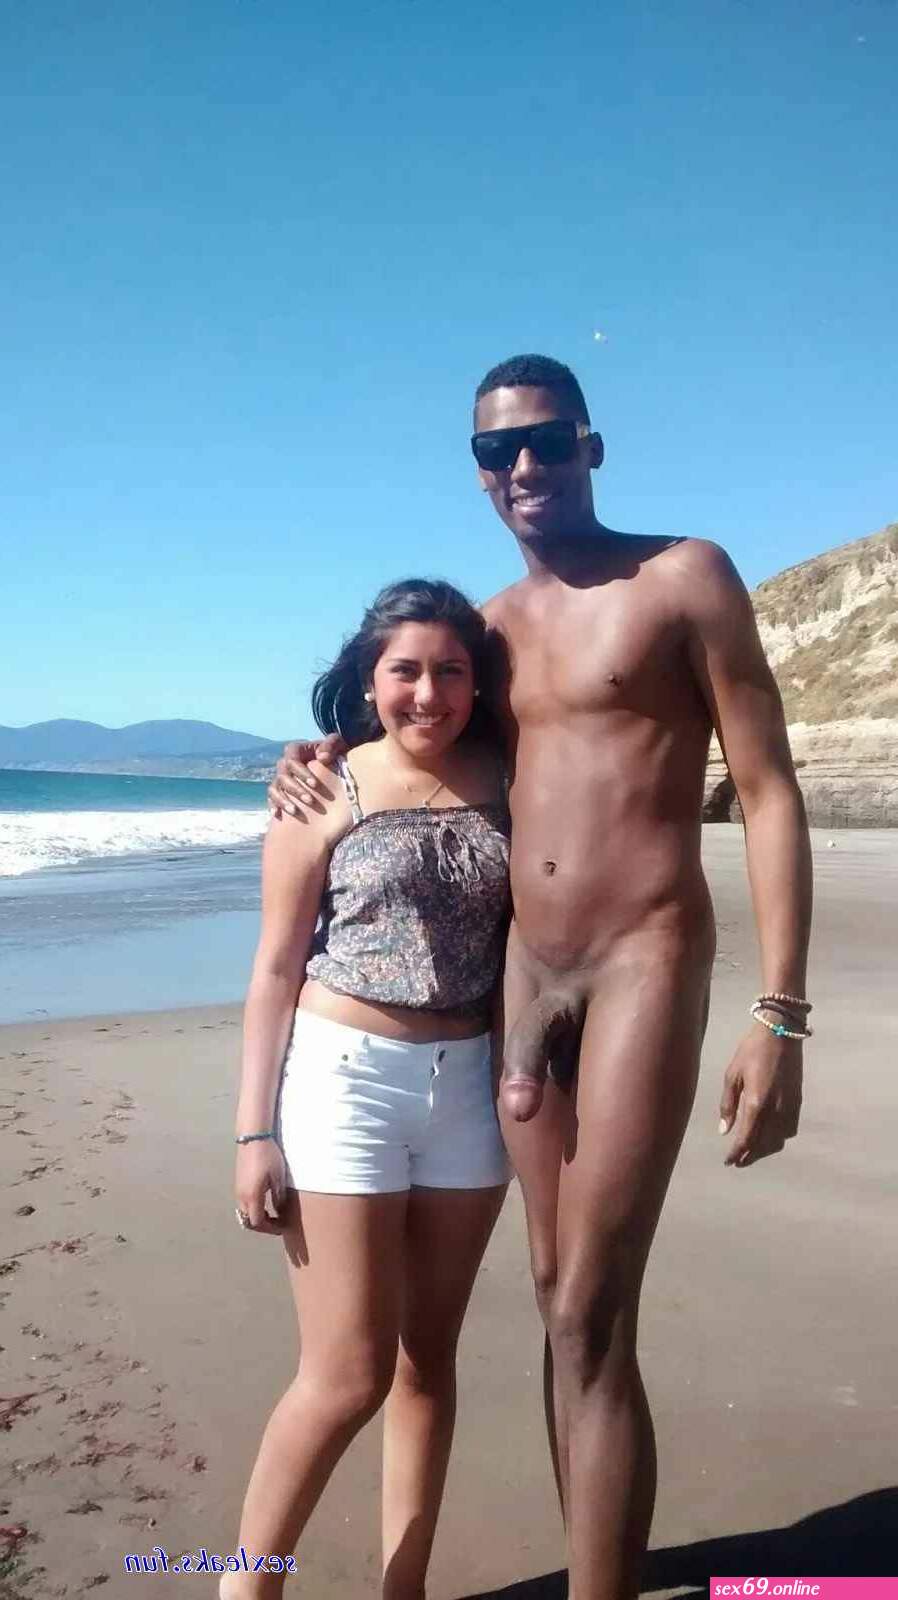 Big Penis Handjob On Beach - huge dicks on beach - Sexy photos